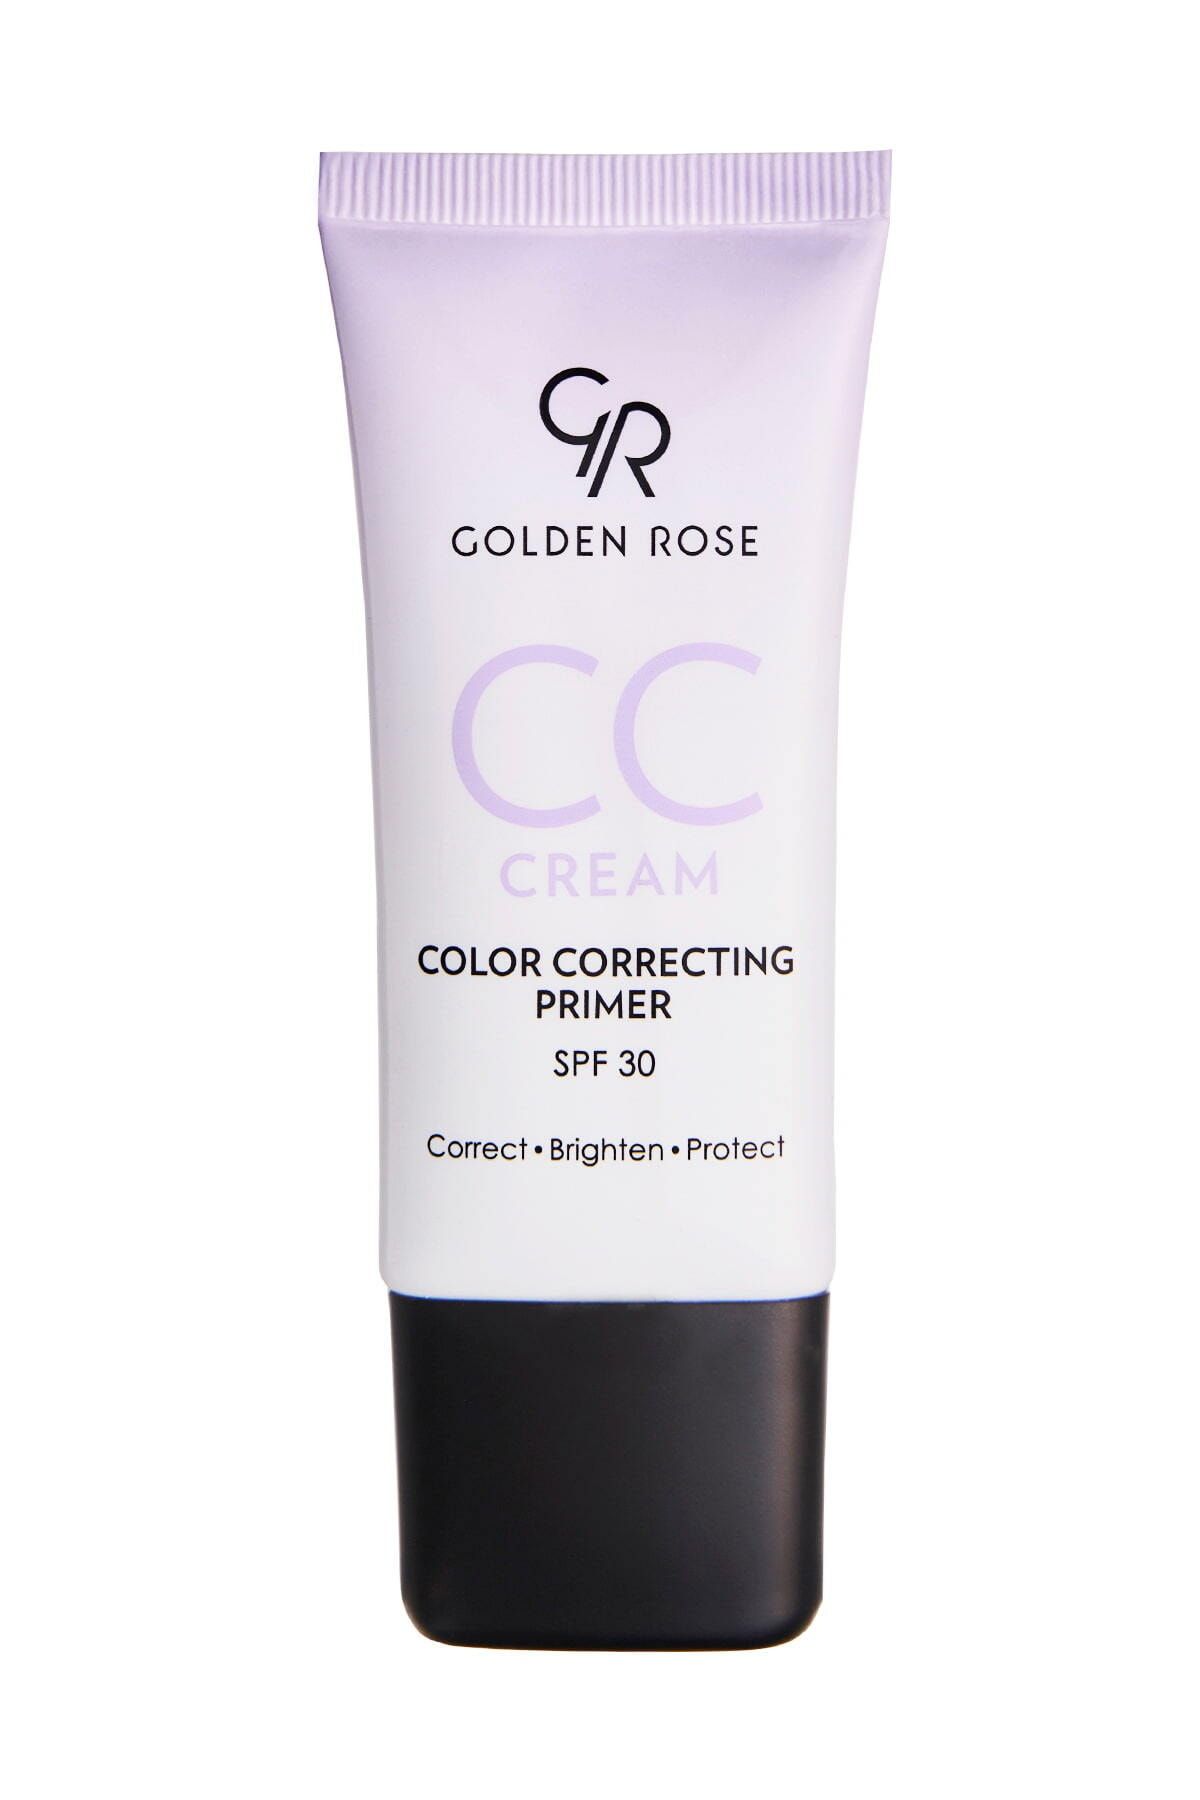 Golden Rose Cc Cream Color Correcting Primer No:01 Violet - Cilt Rengini Dengeleyen Cc Krem